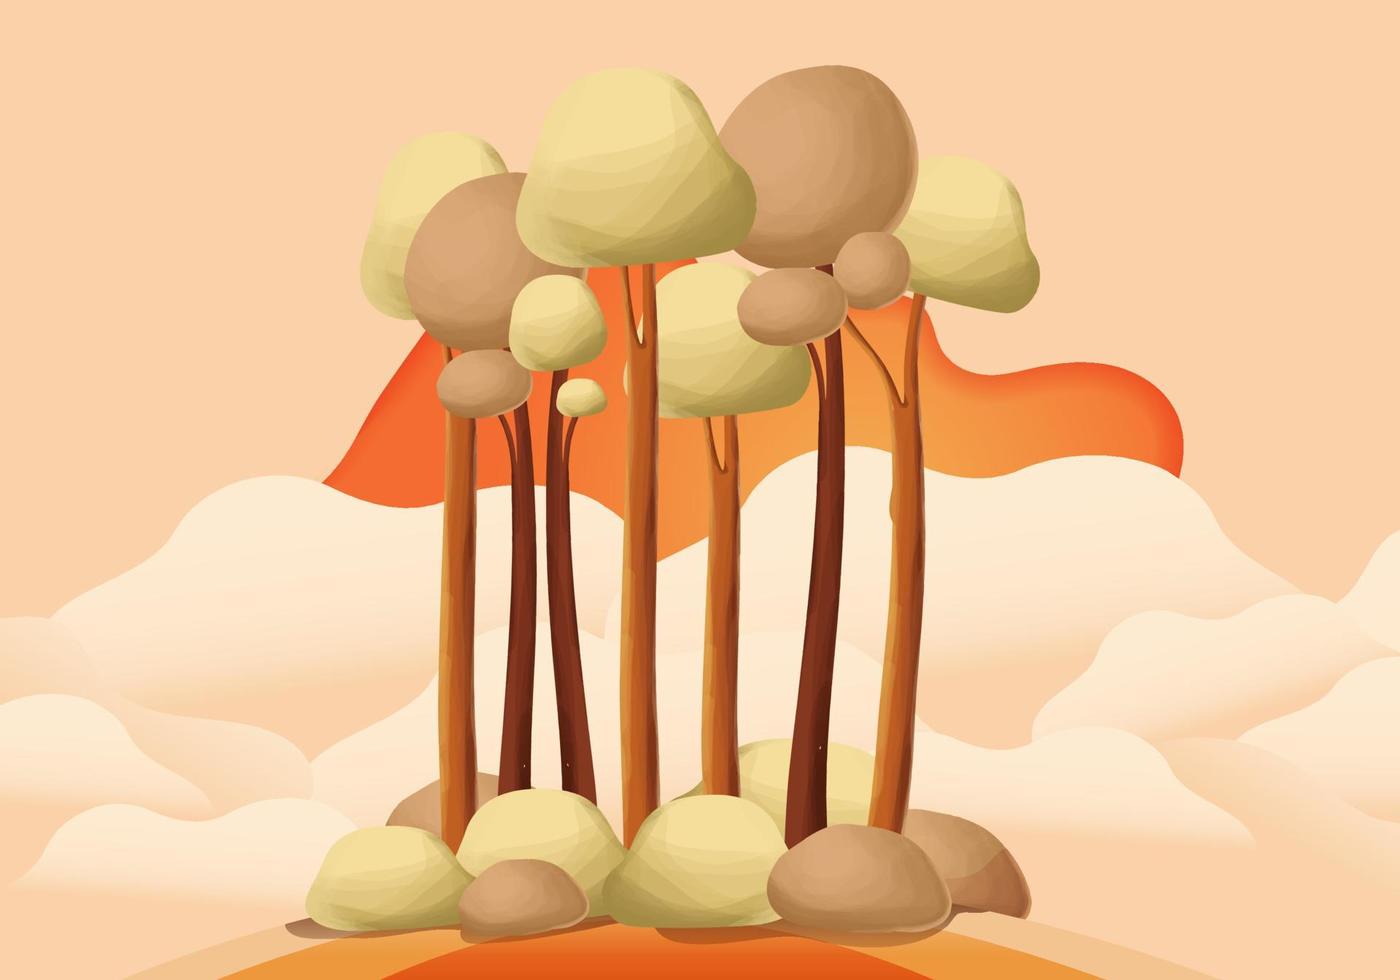 Autumn or Fall Season Trees landscape Background Illustration vector